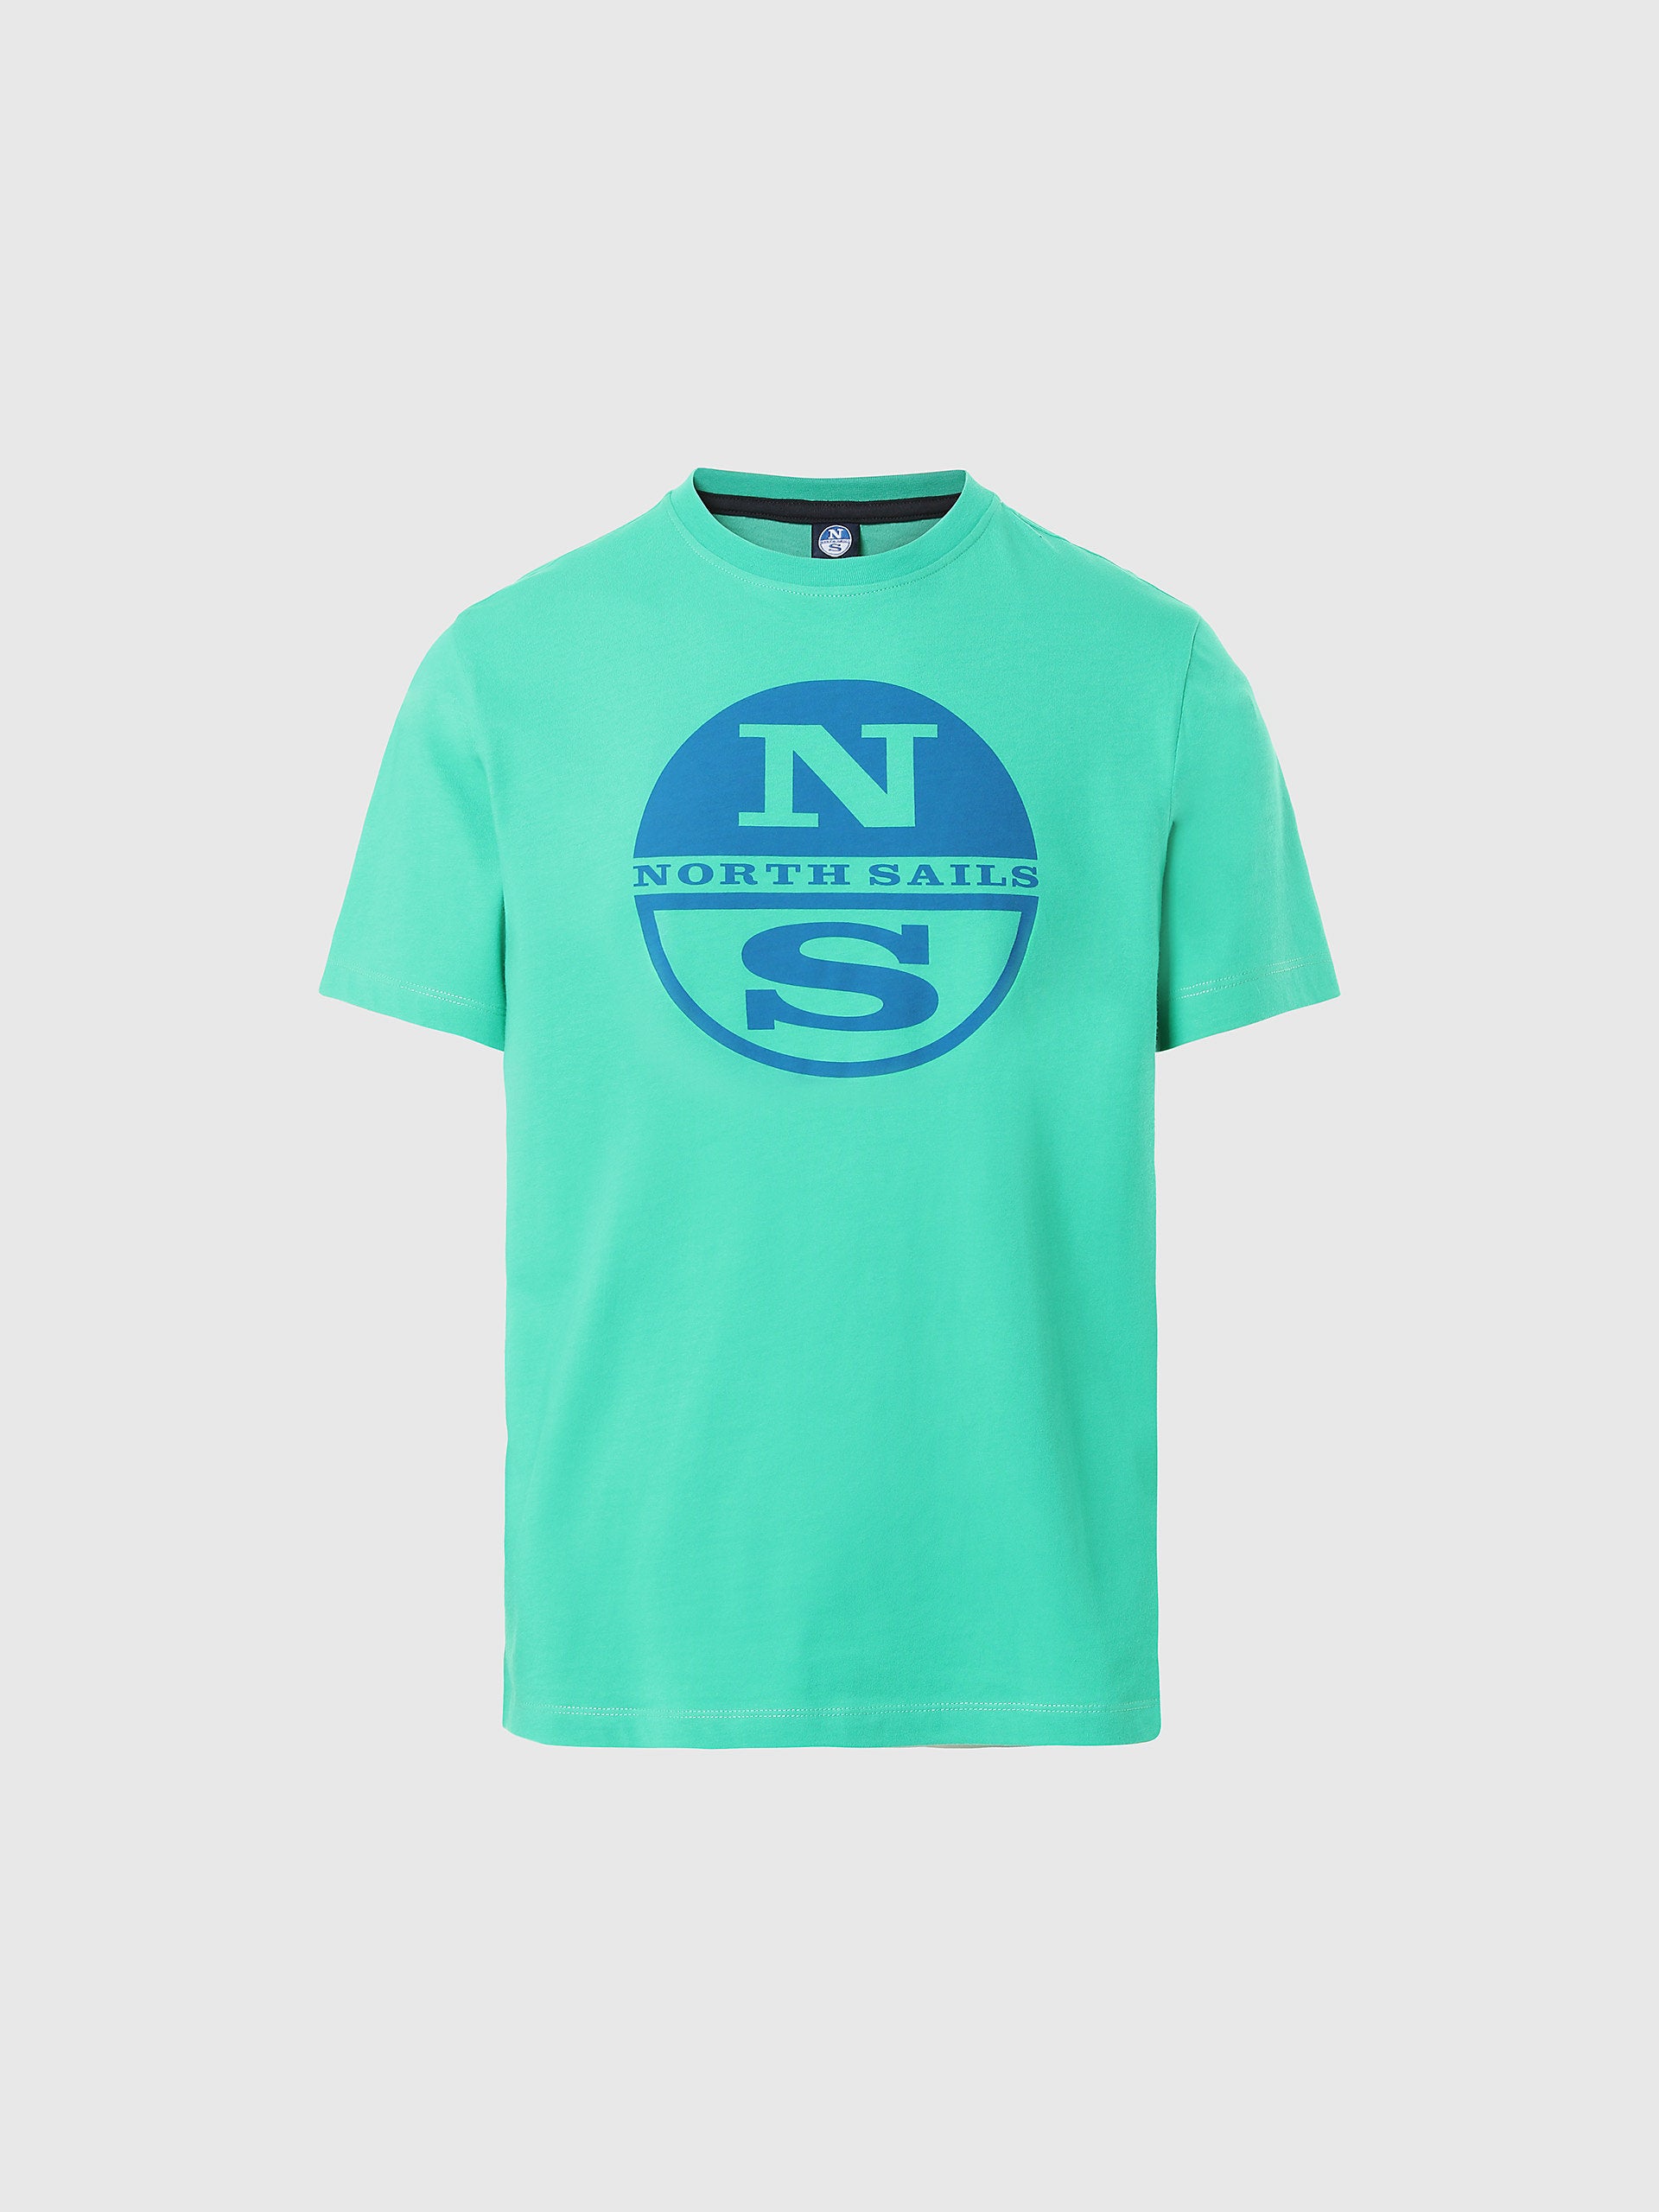 North Sails - T-shirt con stampa maxi logoNorth SailsGarden greenS